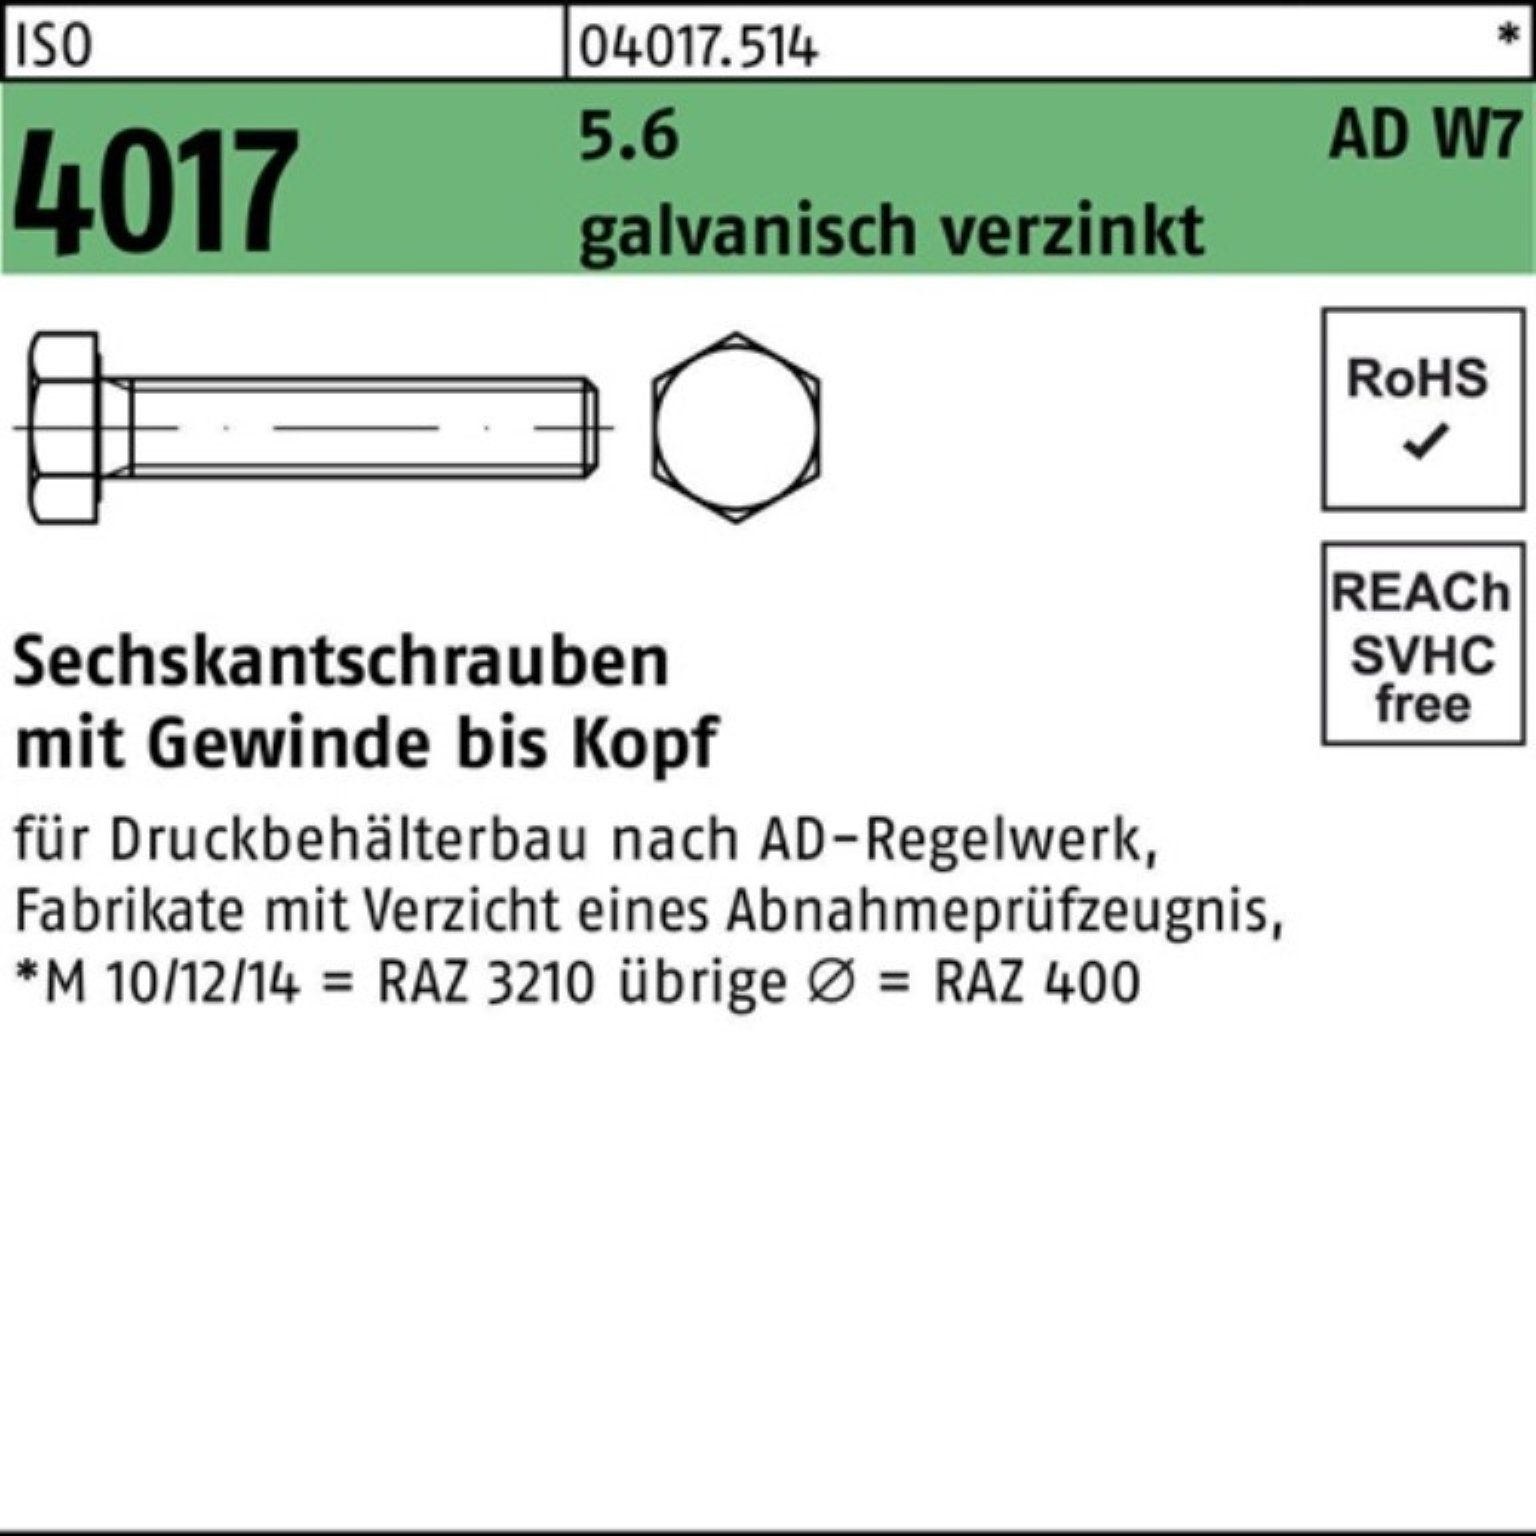 AD ISO Sechskantschraube 4017 M16x Pack W7 VG Bufab 45 5.6 100er galv.verz. Sechskantschraube